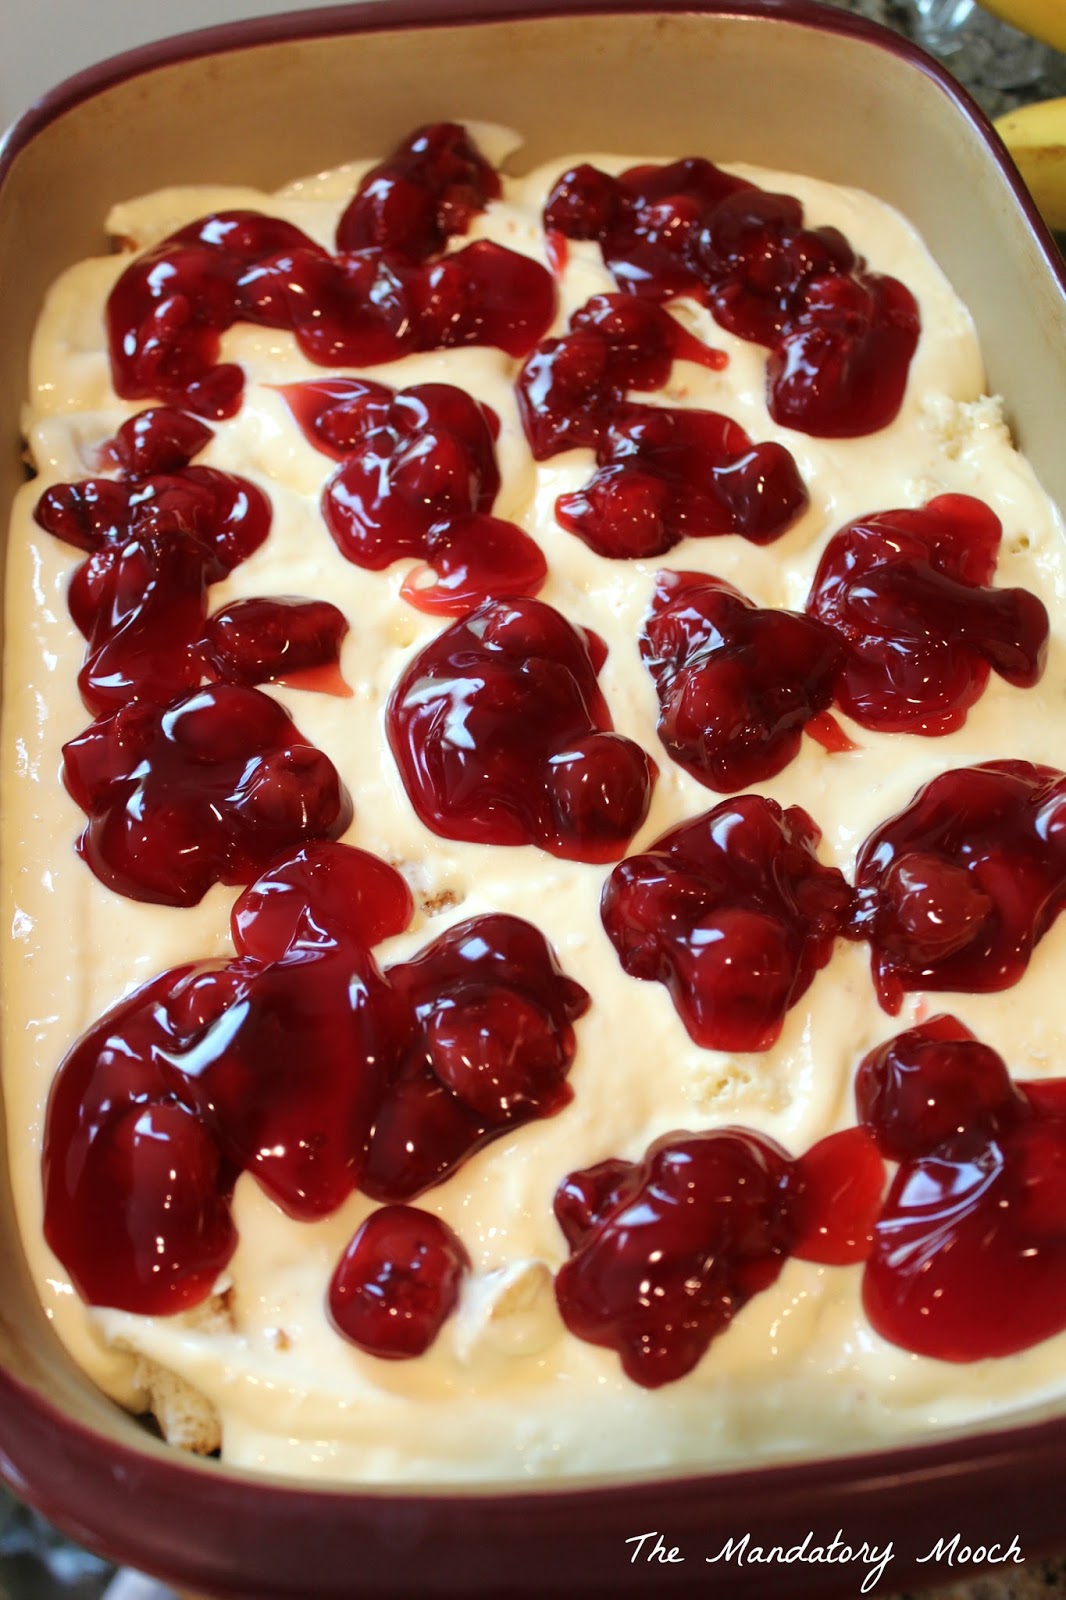 The Mandatory Mooch: Cherry Cheesecake Surprise Layered Dessert